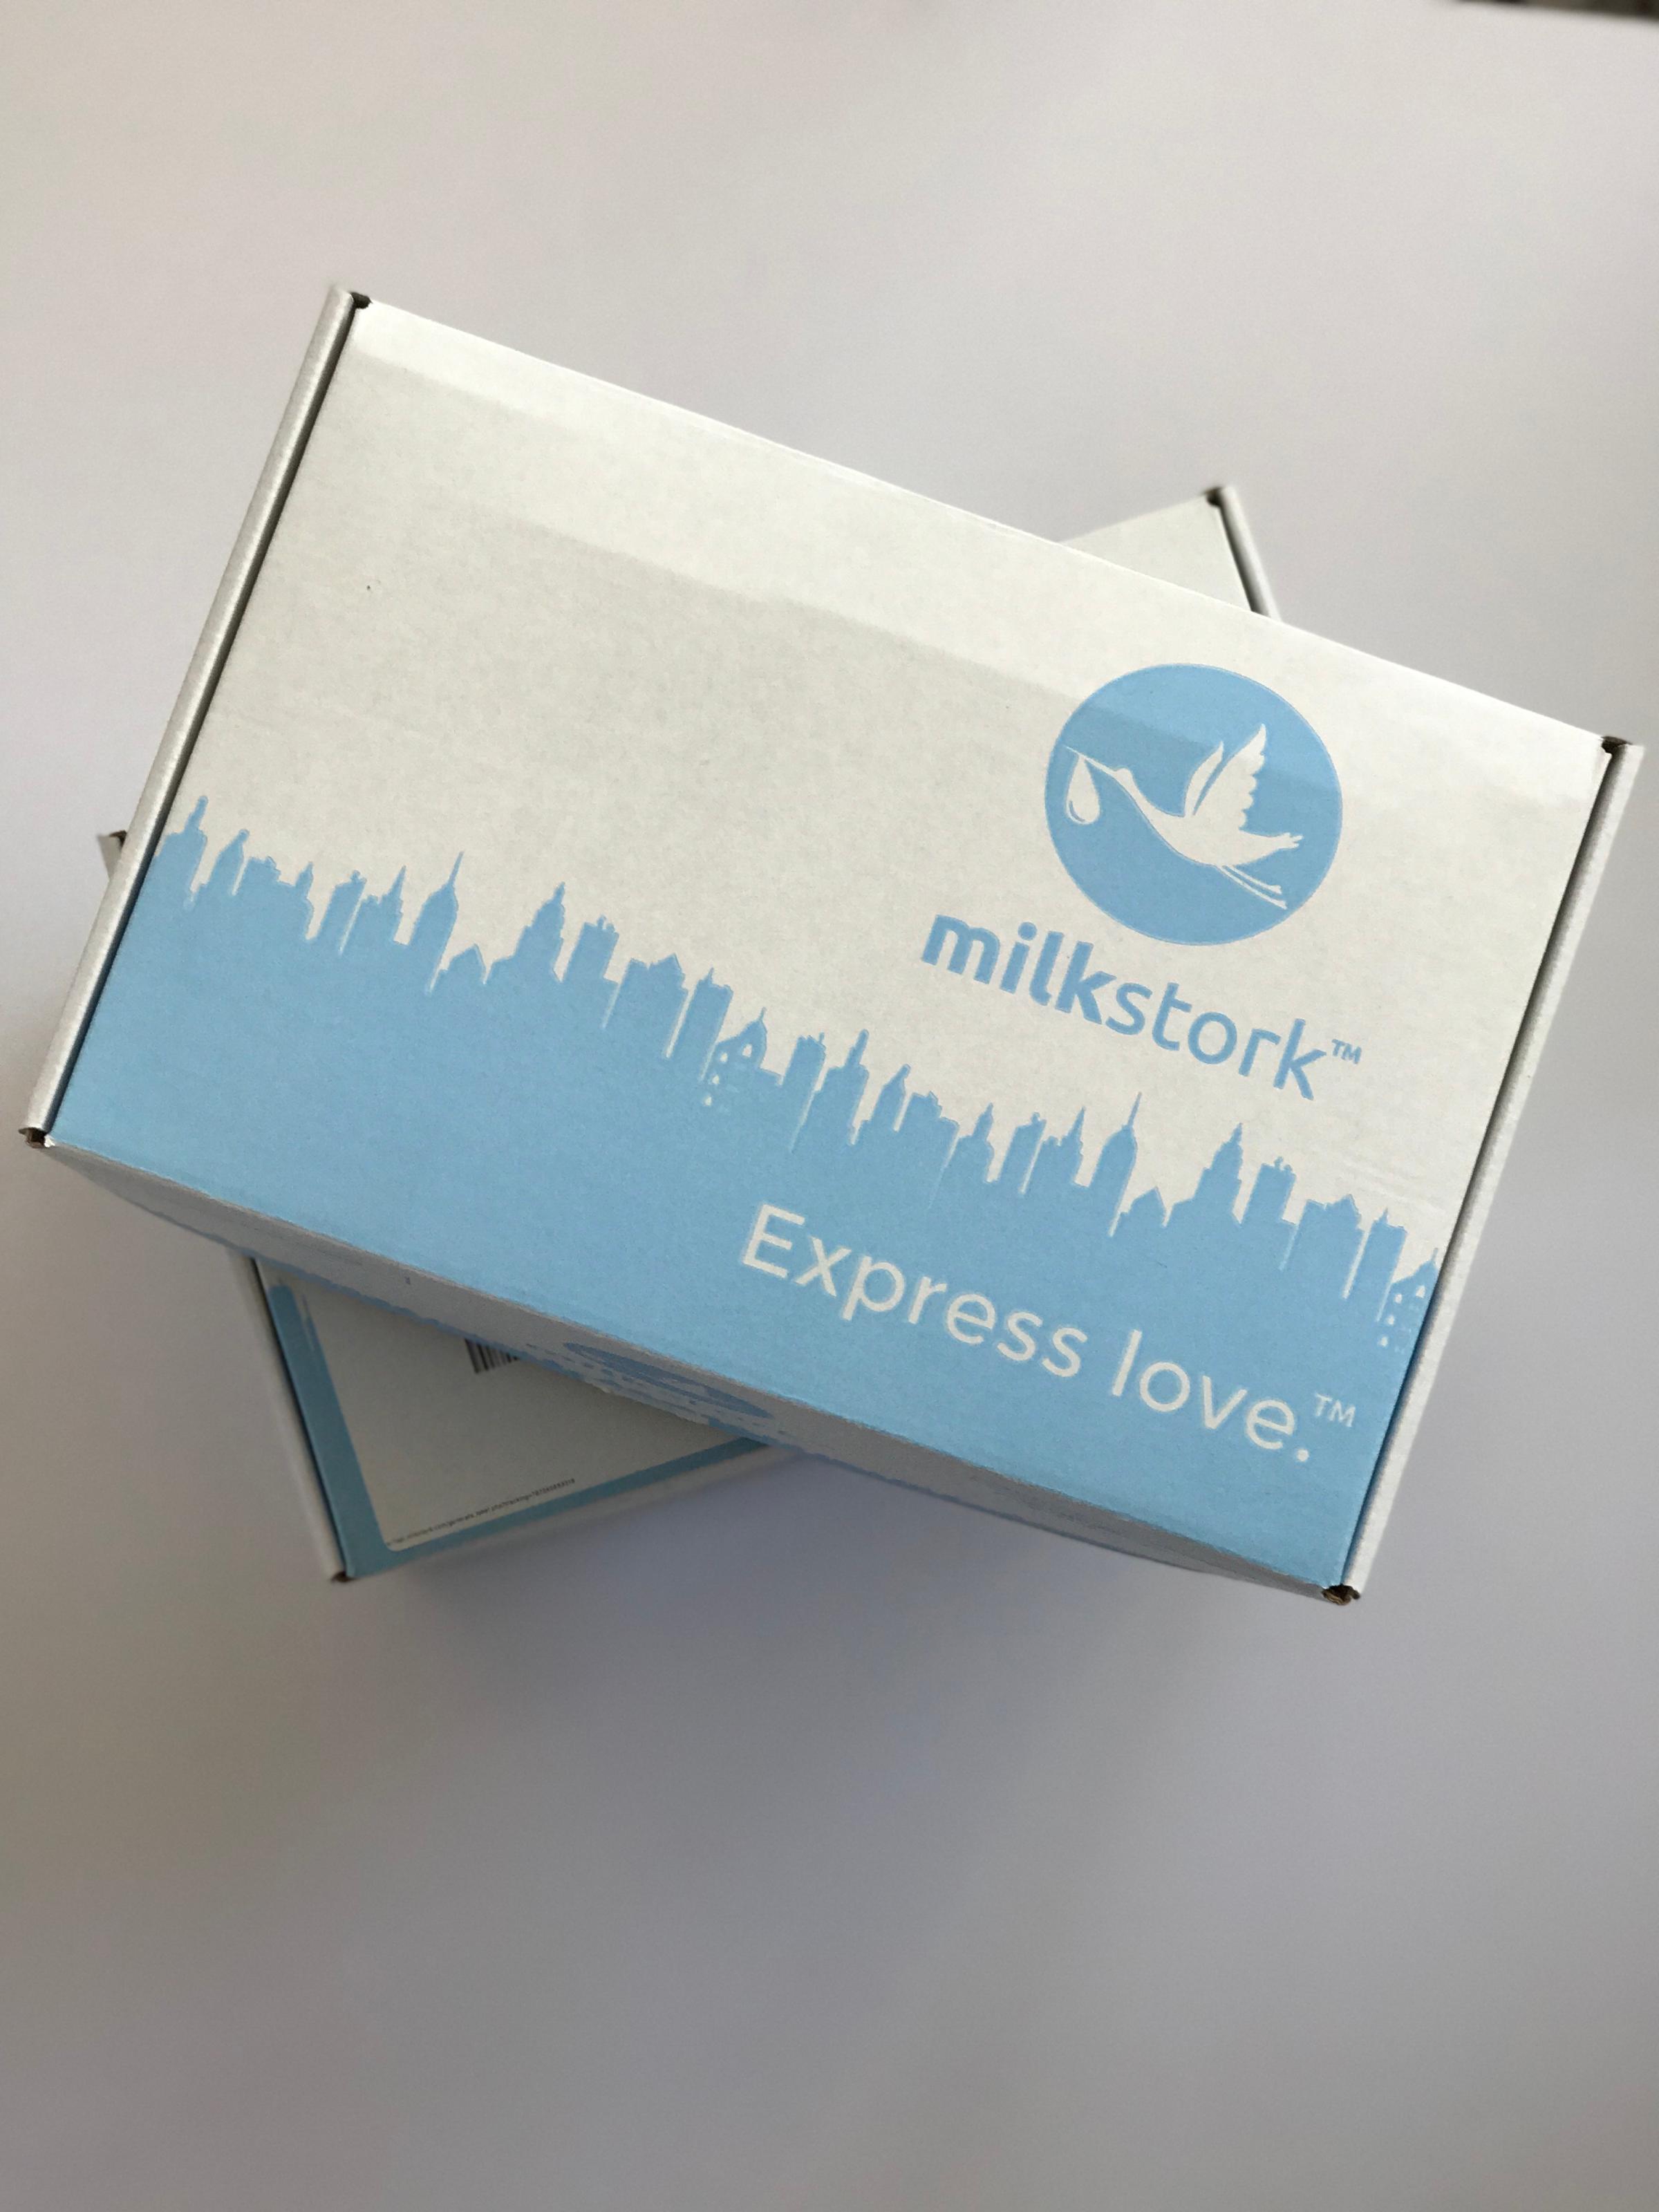 Milk Stork shipping kits